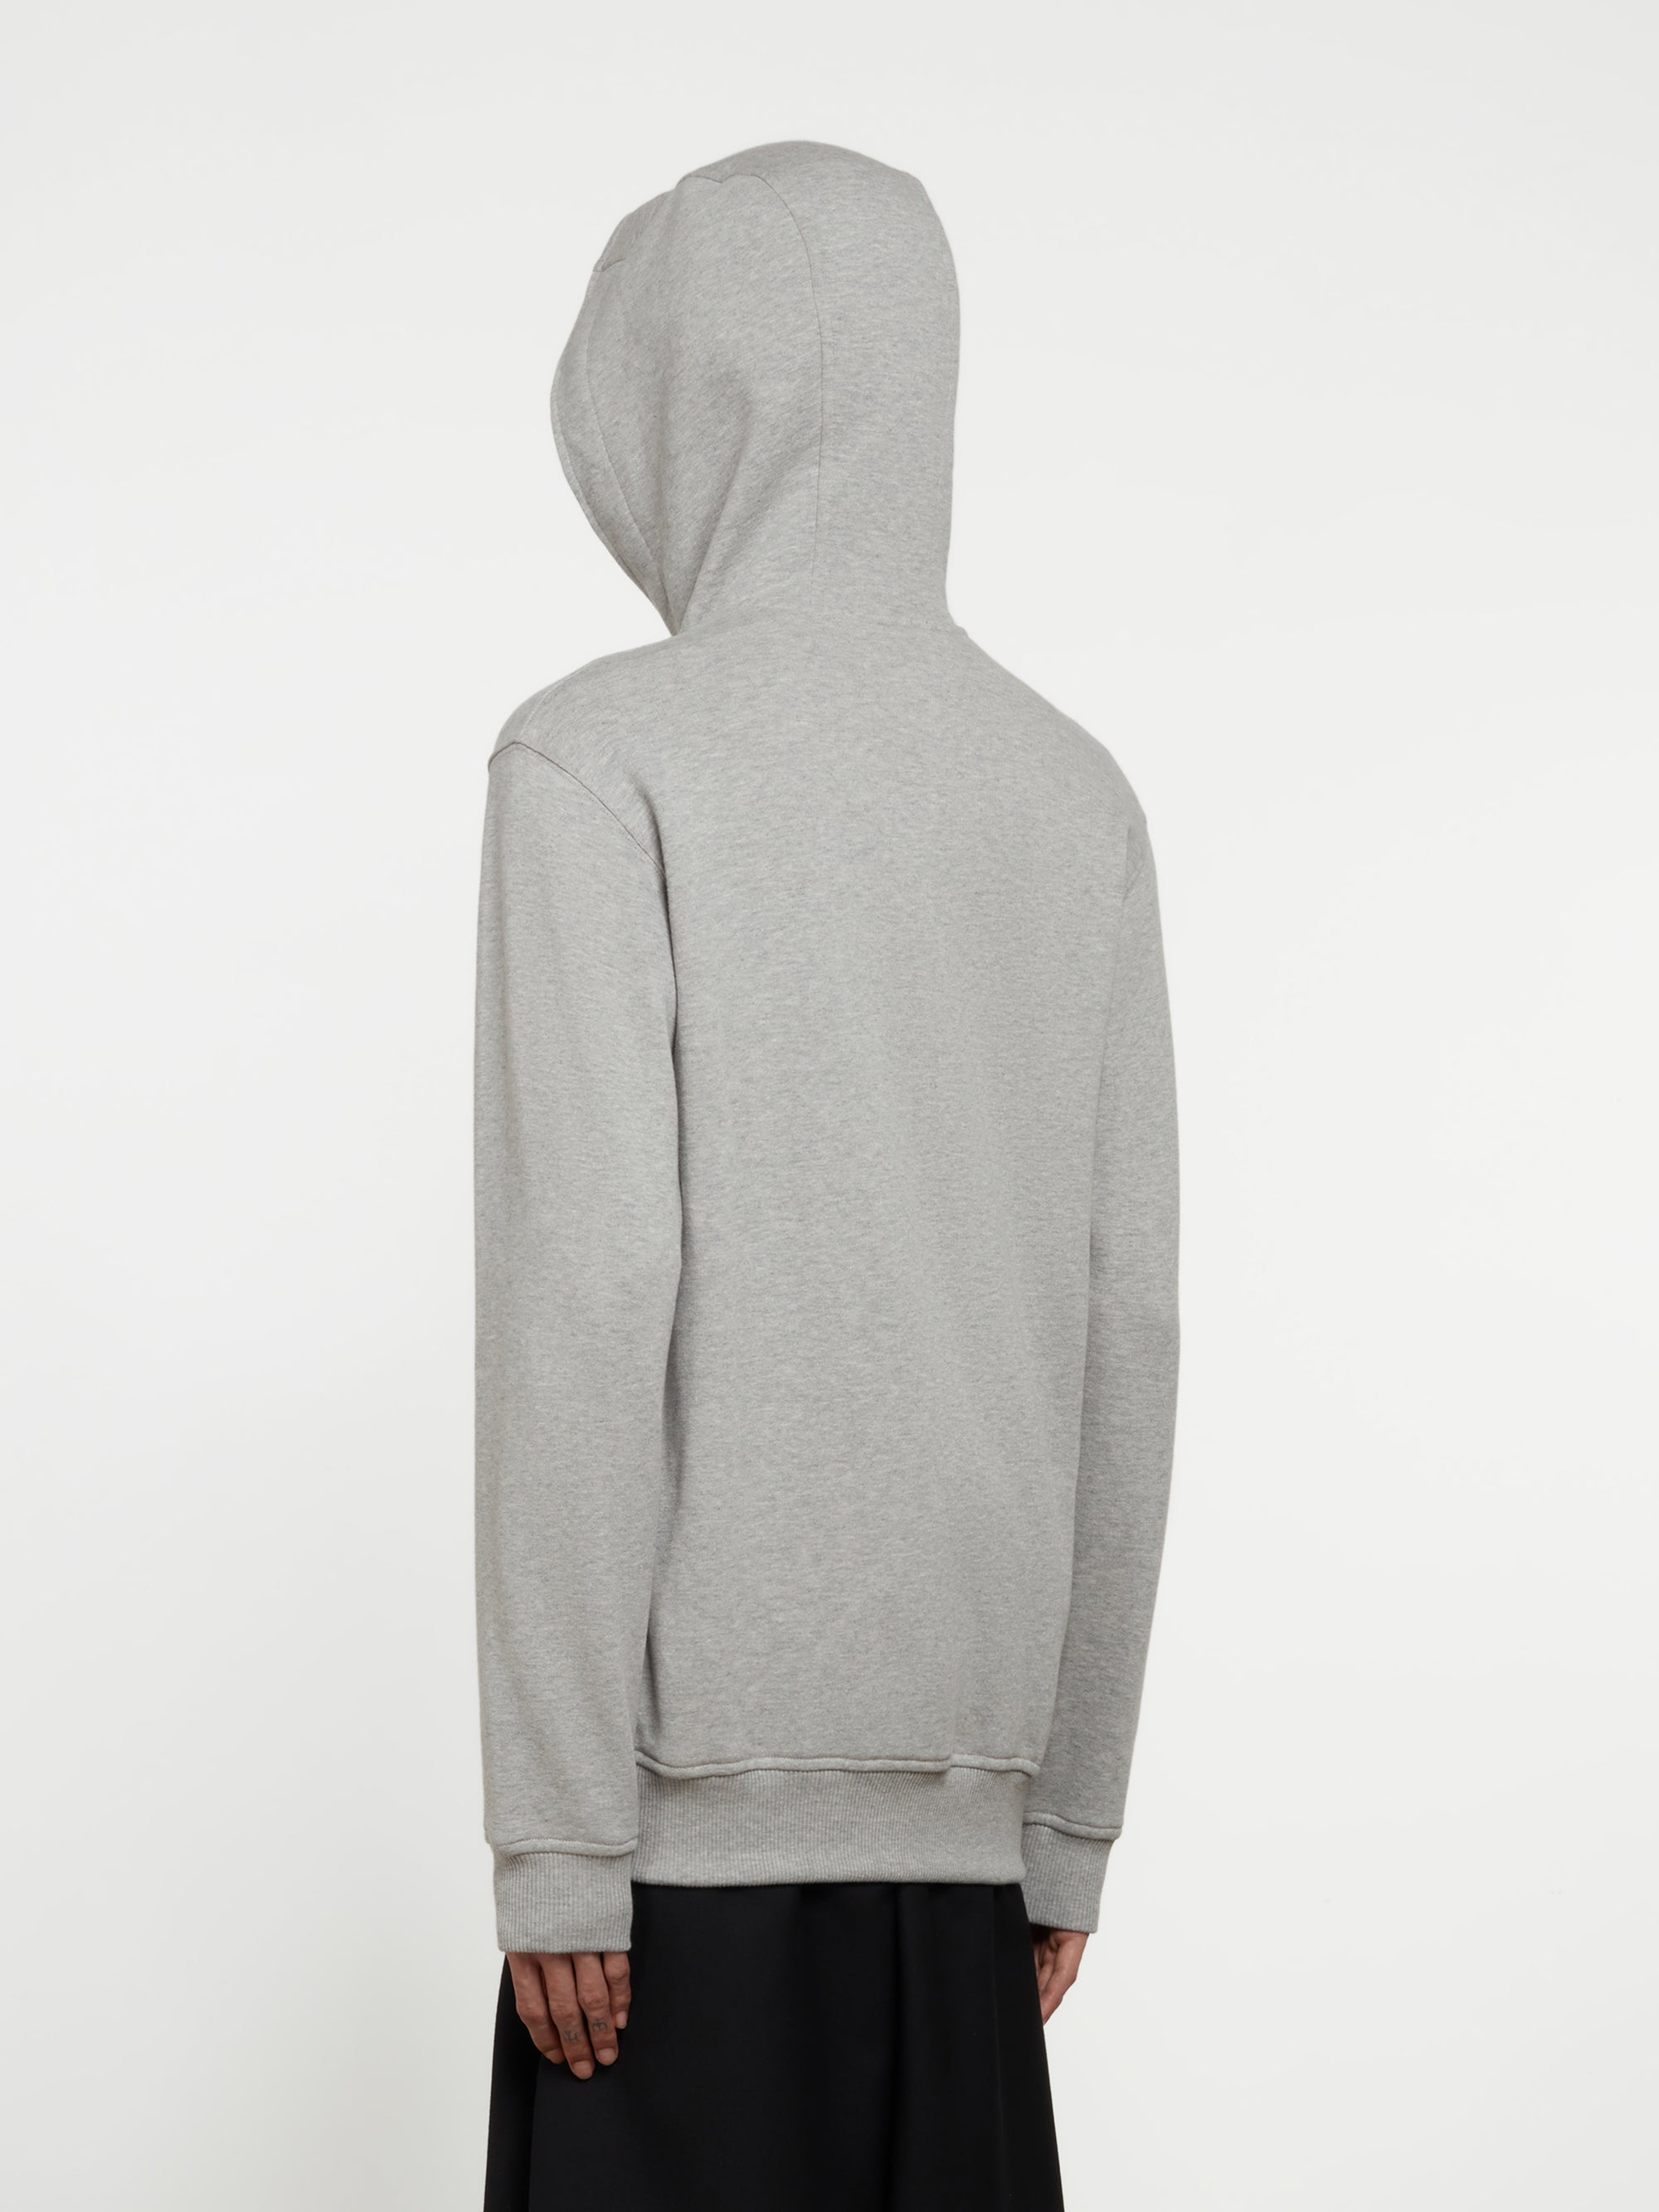 CDG Shirt - Lacoste Men's Hooded Sweatshirt - (Grey) view 3